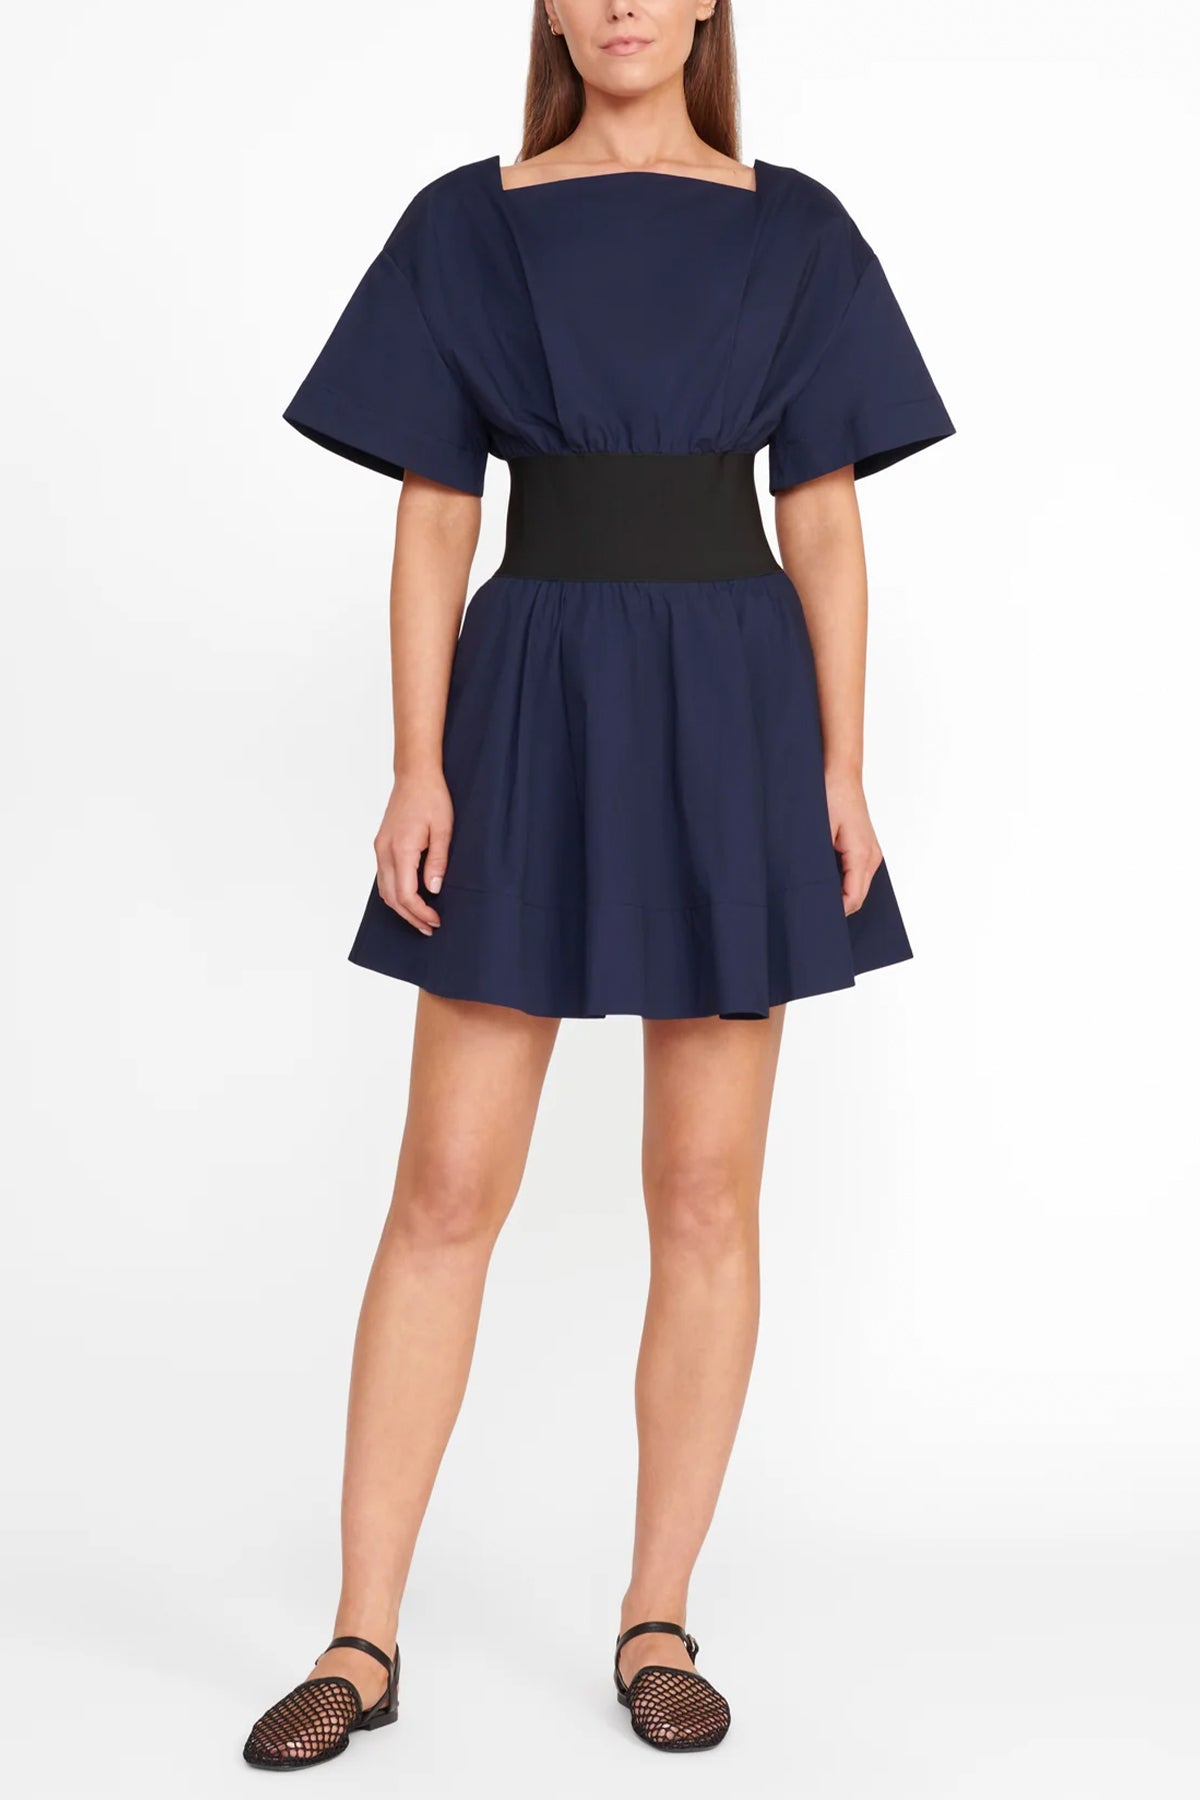 Amy Mini Dress in Navy Black - shop-olivia.com